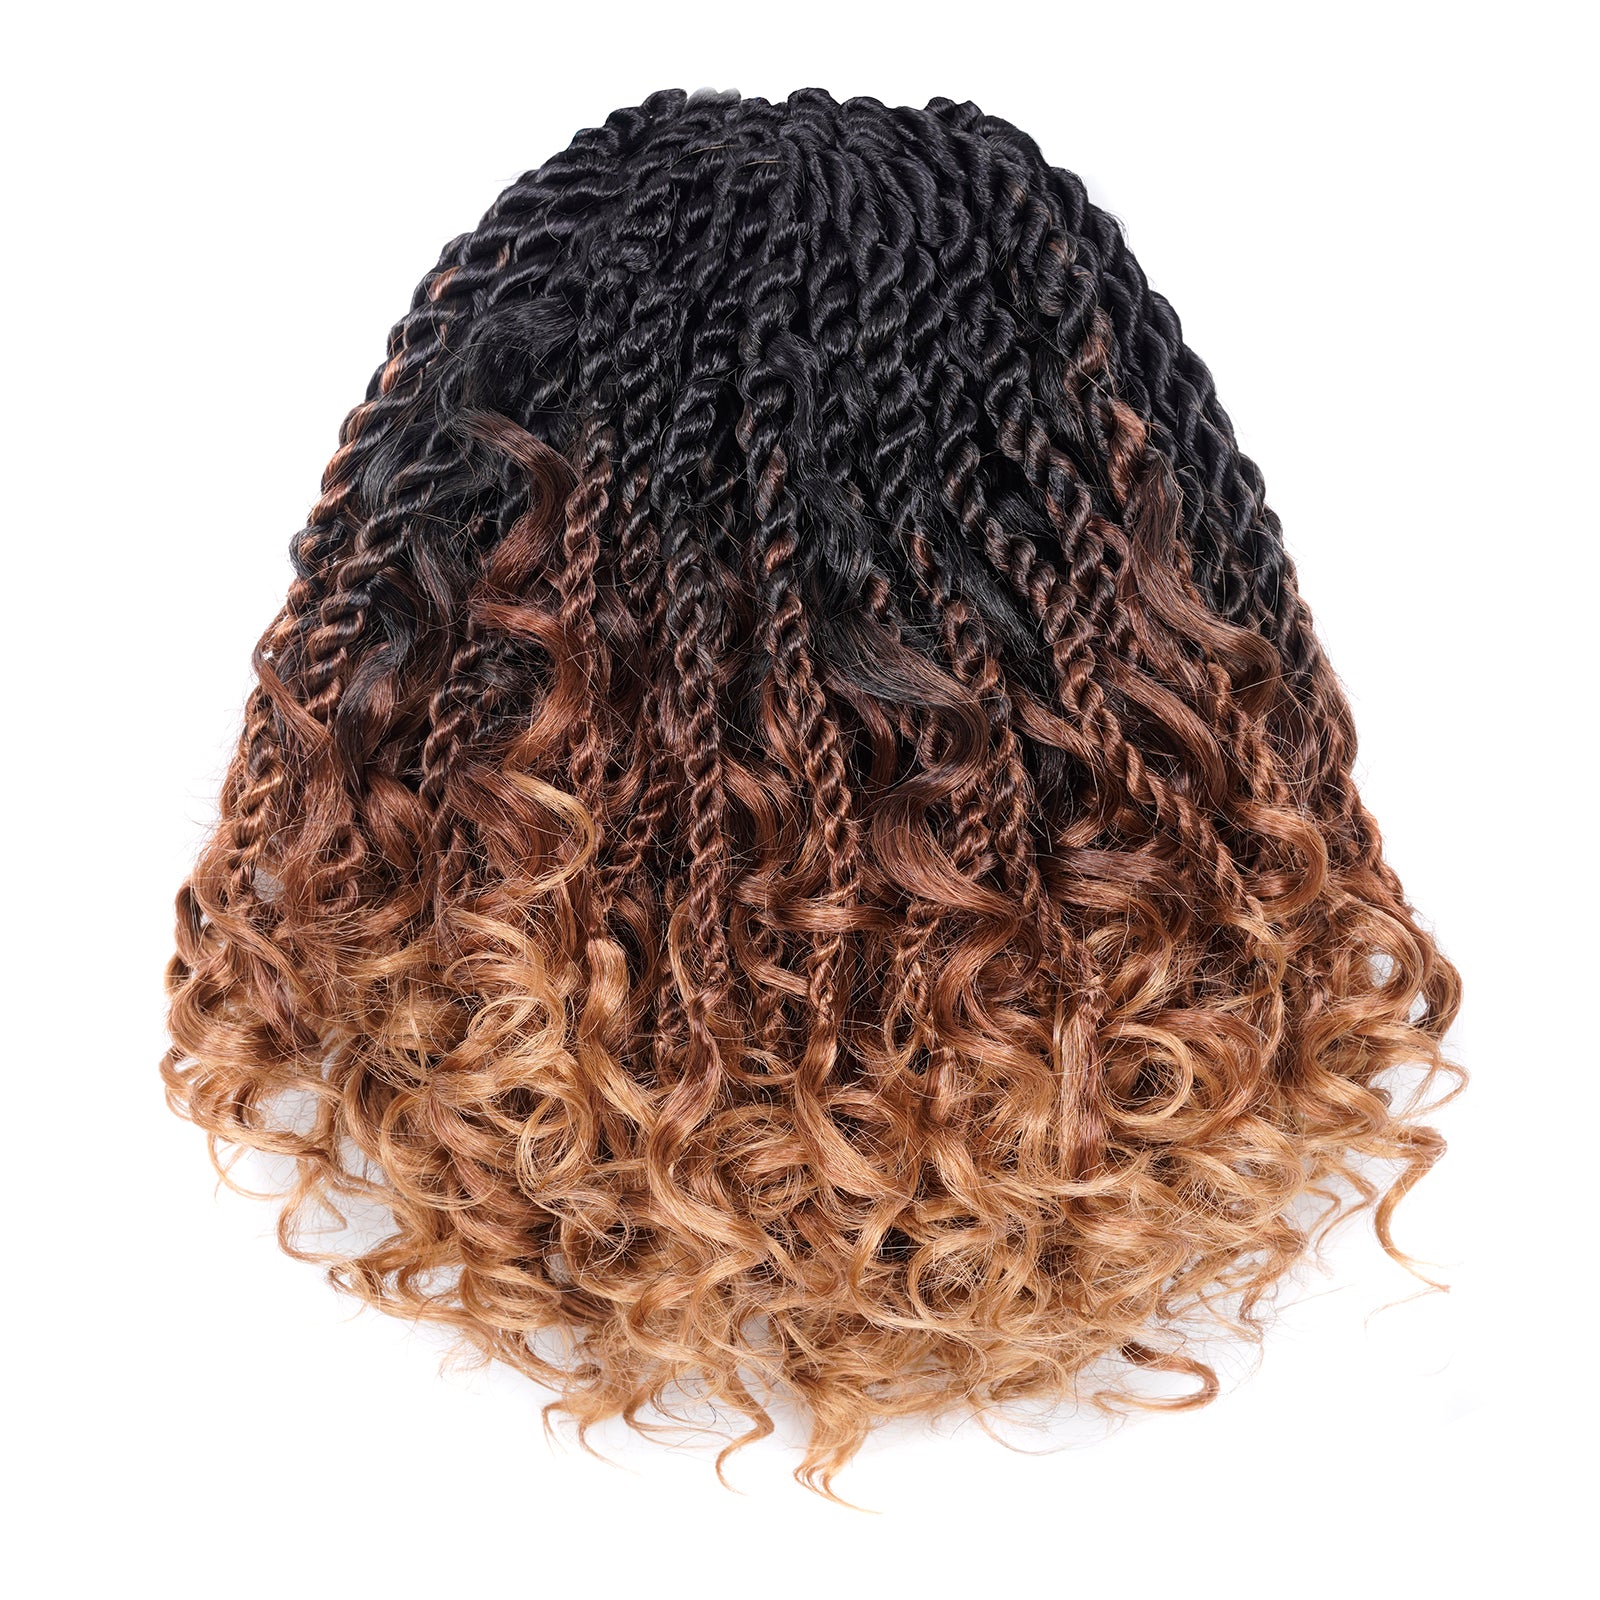 Toyotress Unique Boho Island Twist with Curls Crochet Hair | Crochet Senegalese Twist Pre Looped Senegalese Twist Braiding Hair Wth Curly Ends Crochet for women